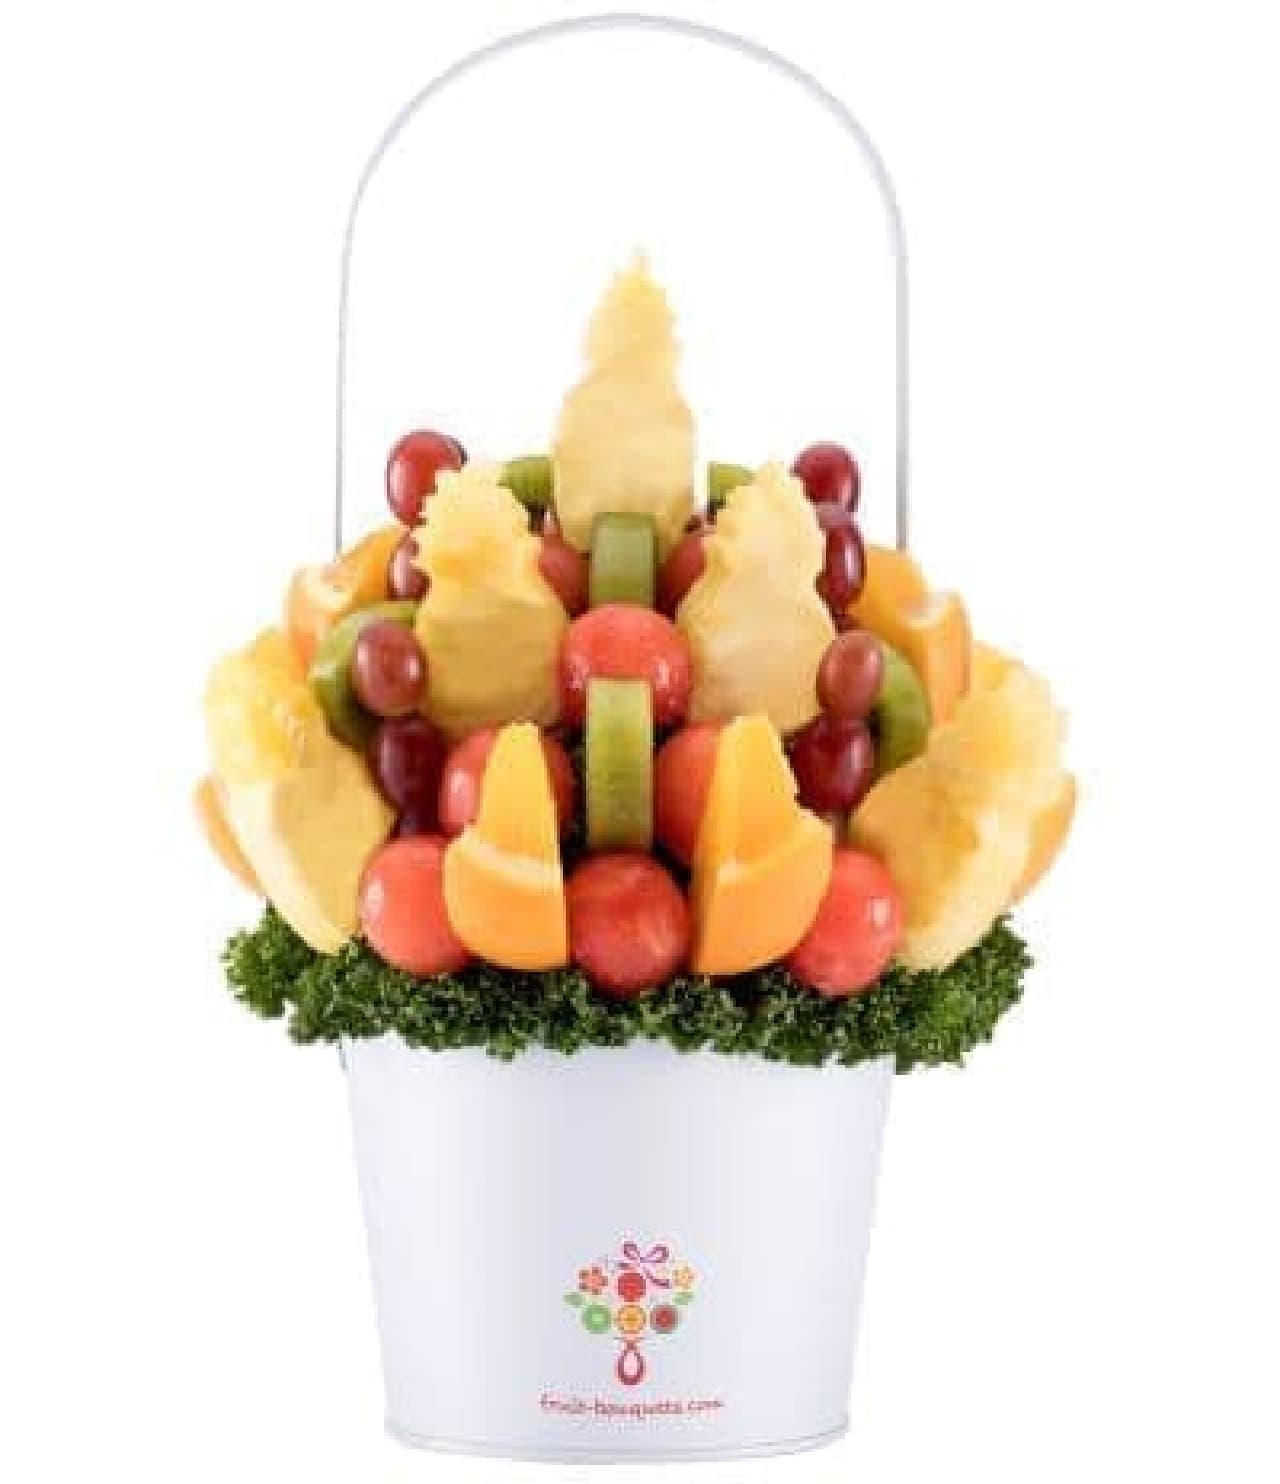 "Tropic" is a fruit bouquet with an arrangement of summer fruits.